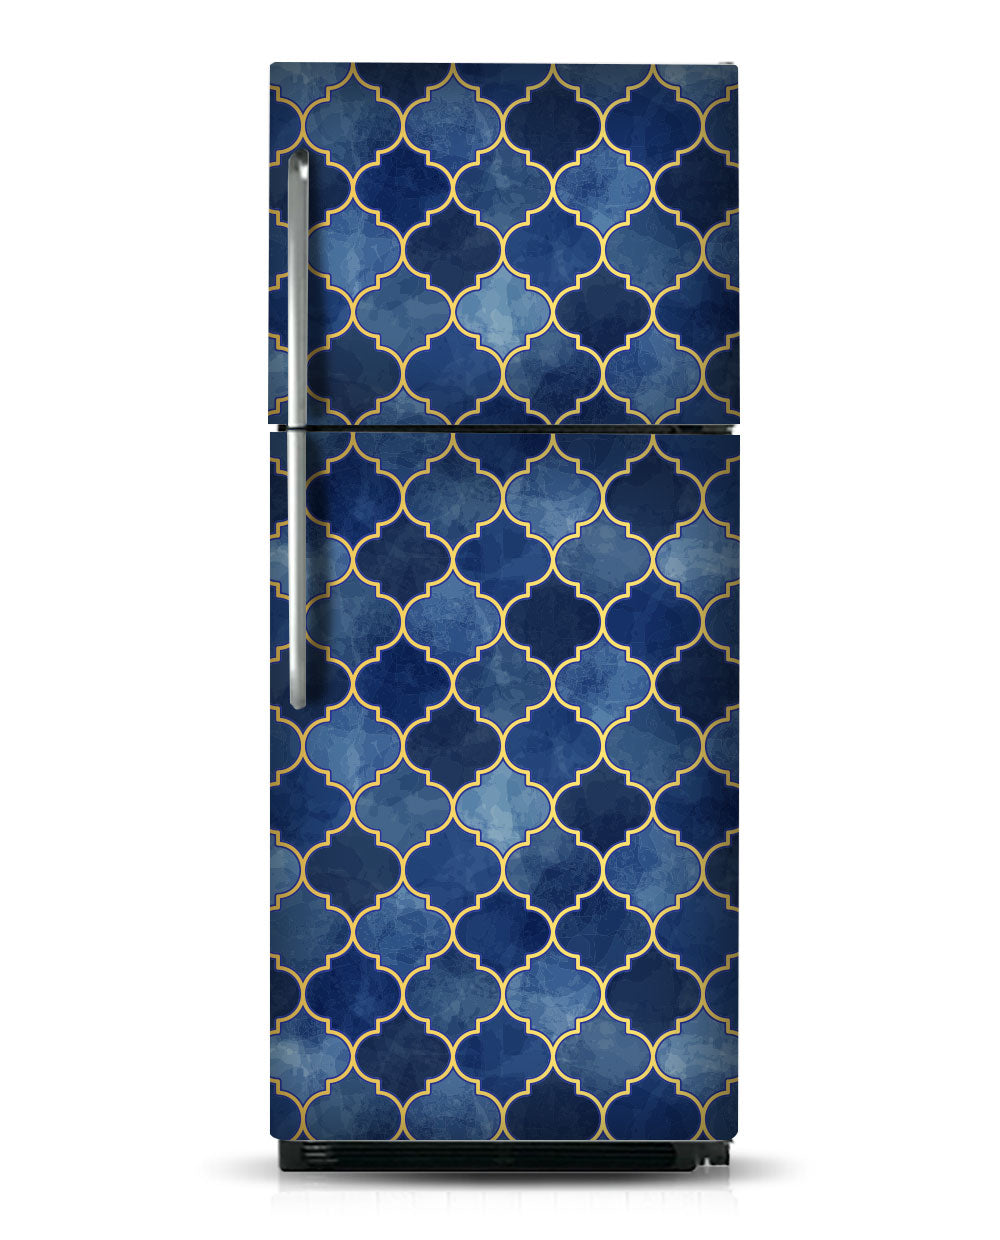 azul marroquí